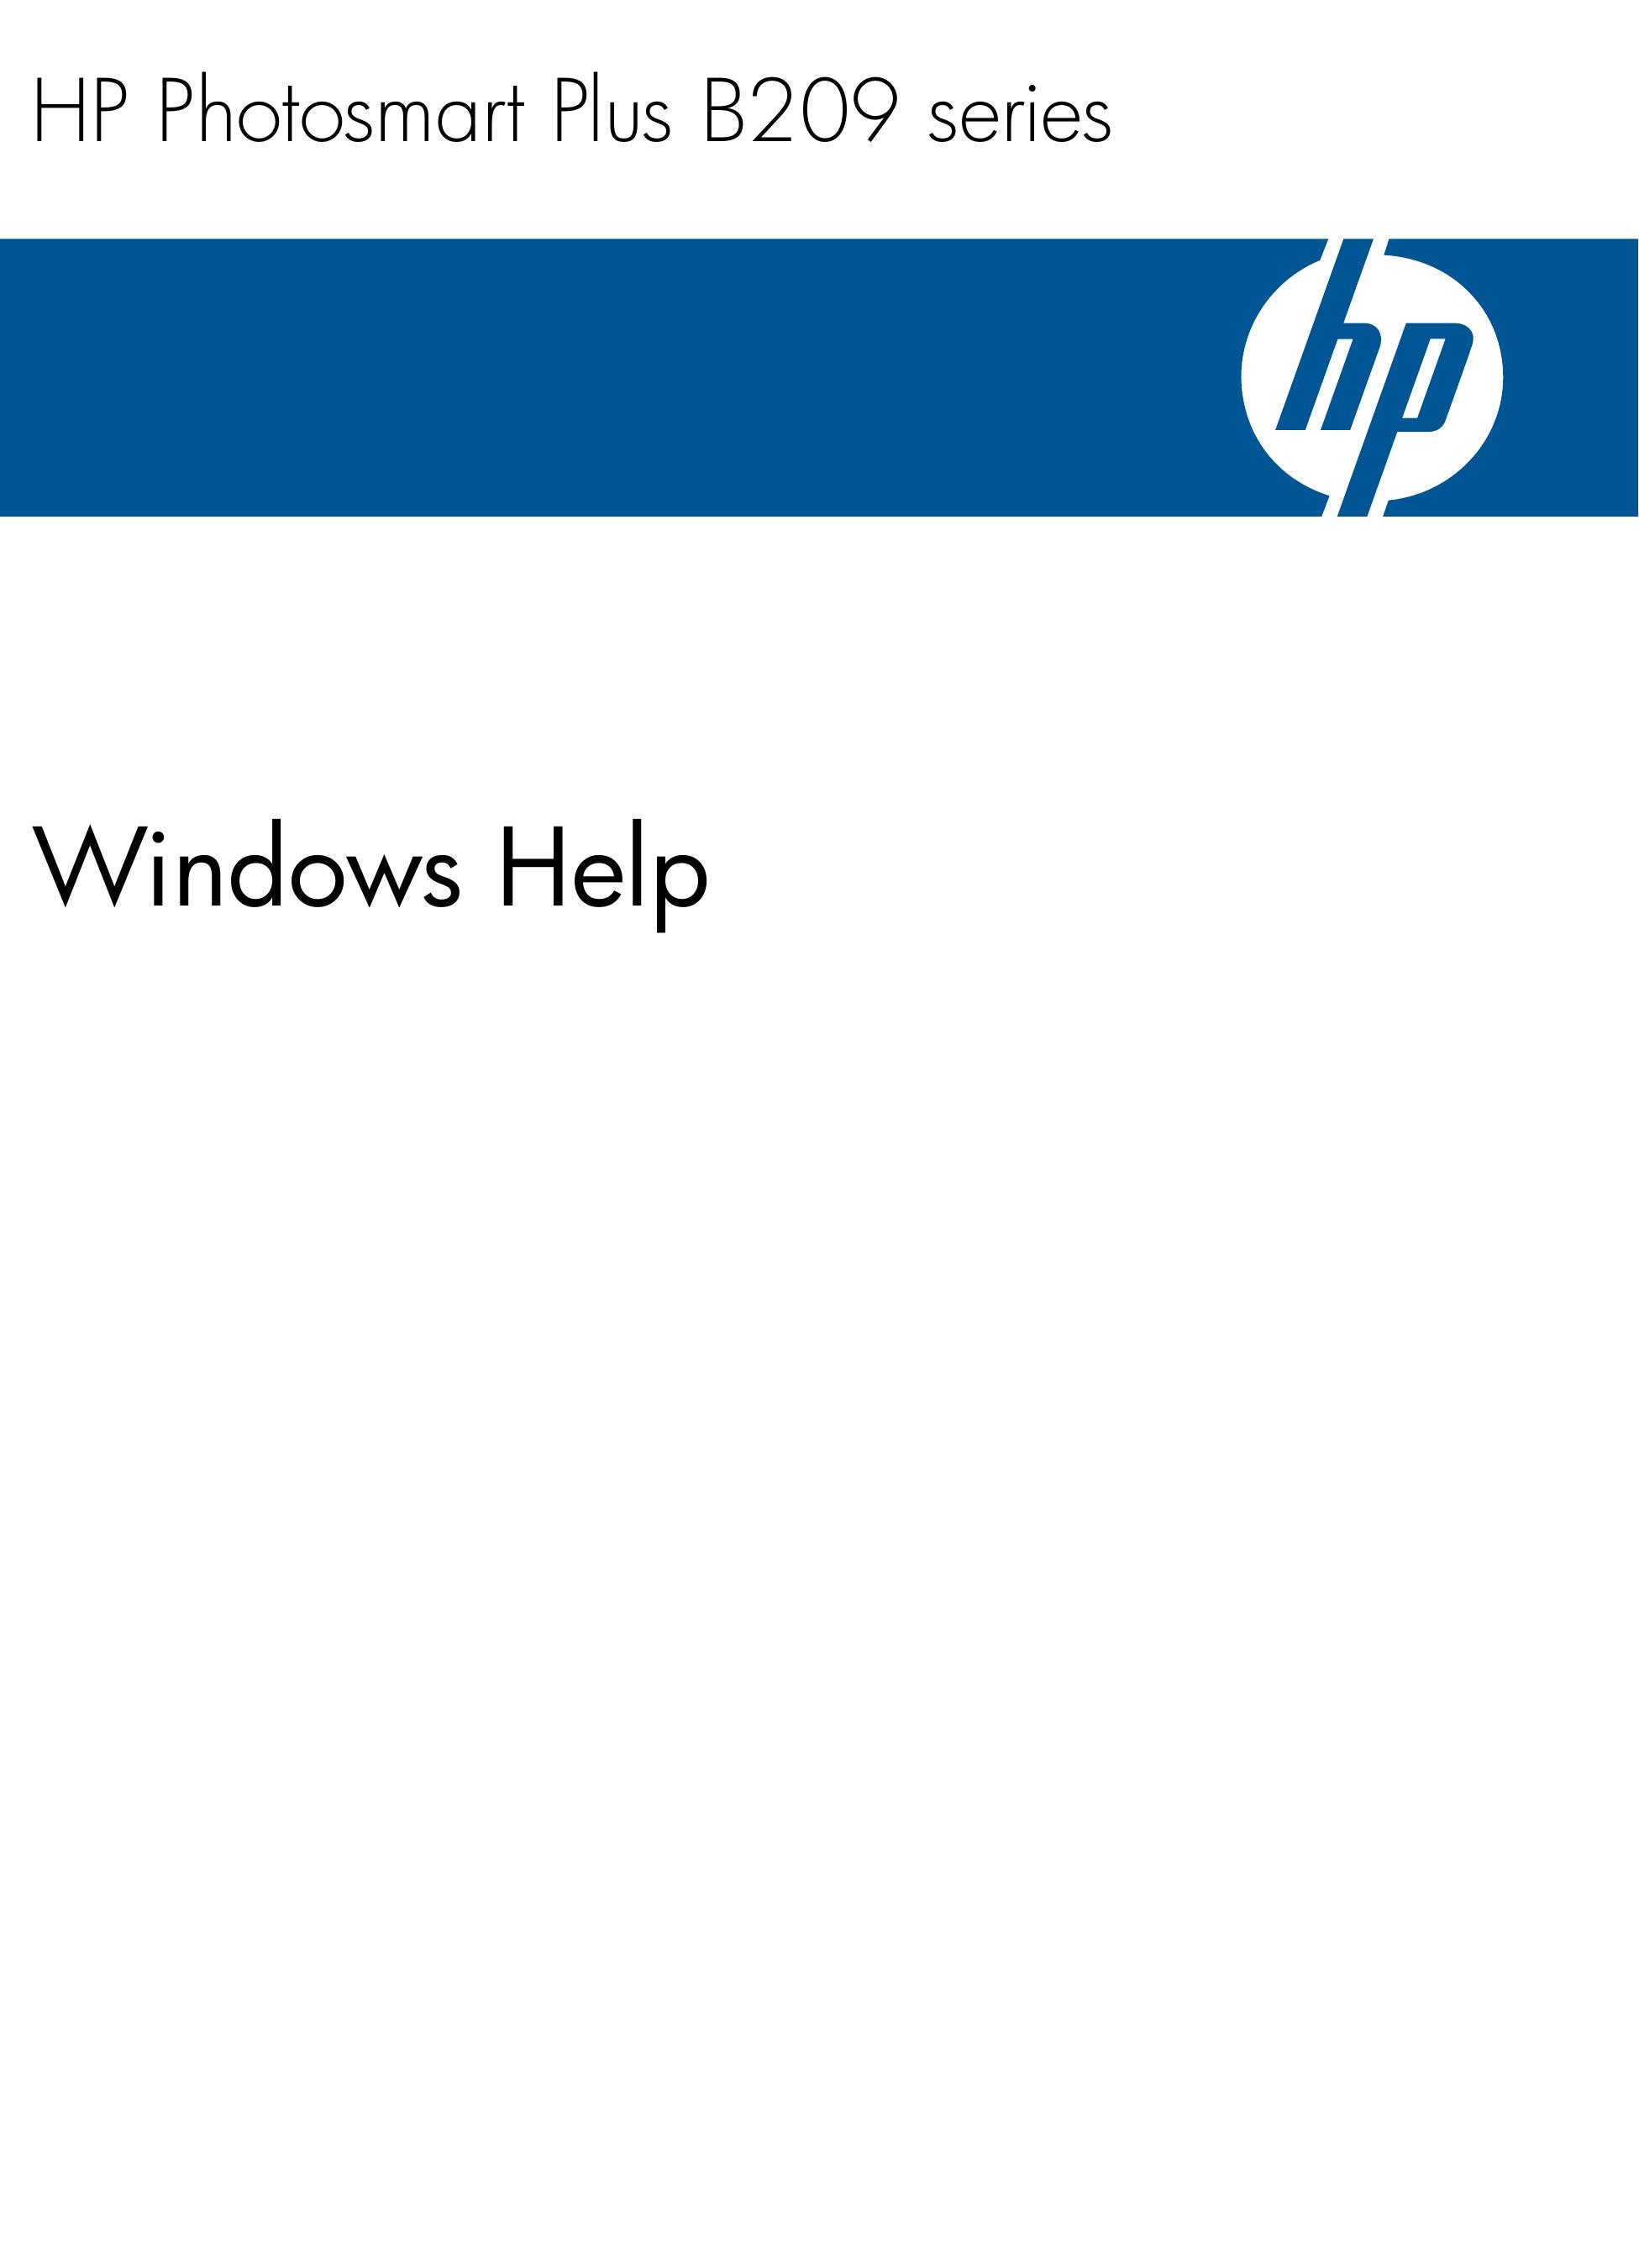 HP (Hewlett-Packard) B209 Photo Printer User Manual